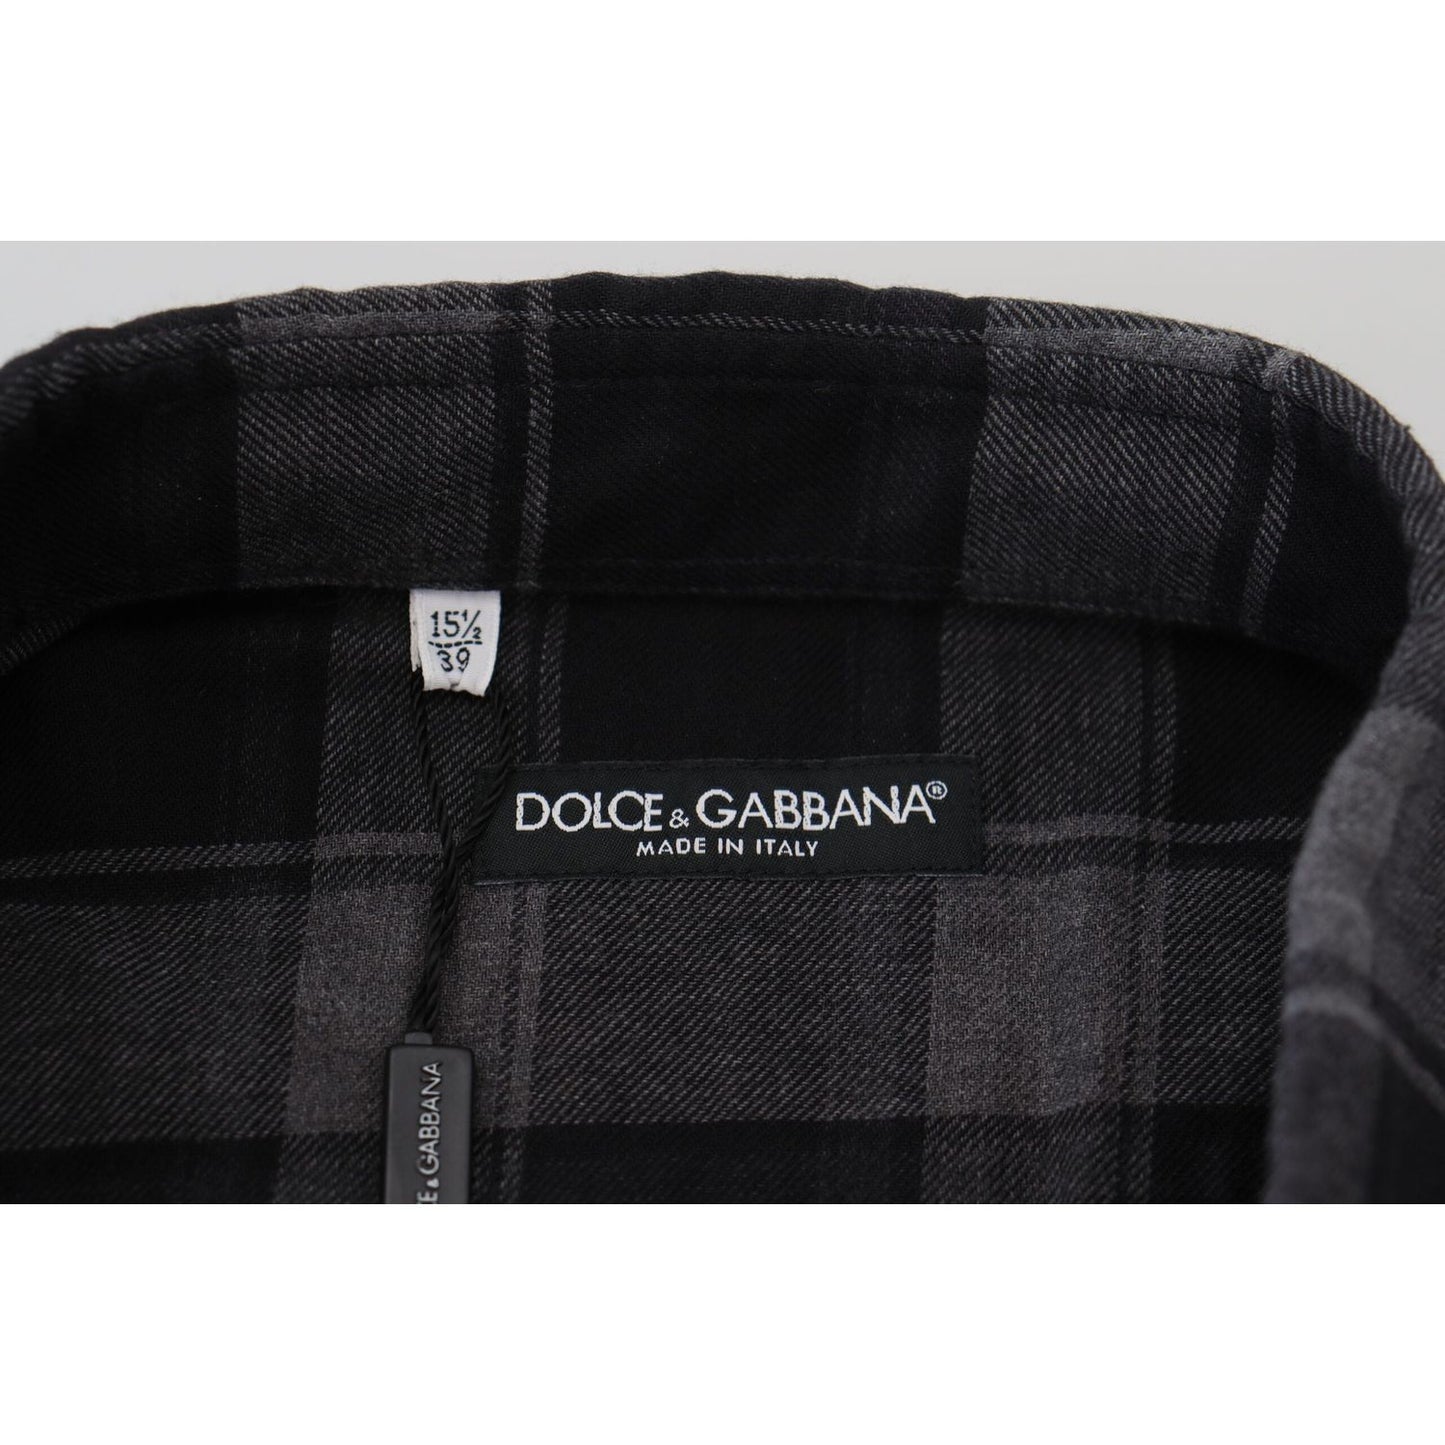 Dolce & Gabbana Elegant Black and Gray Button Down Shirt black-gray-check-men-long-sleeves-shirt